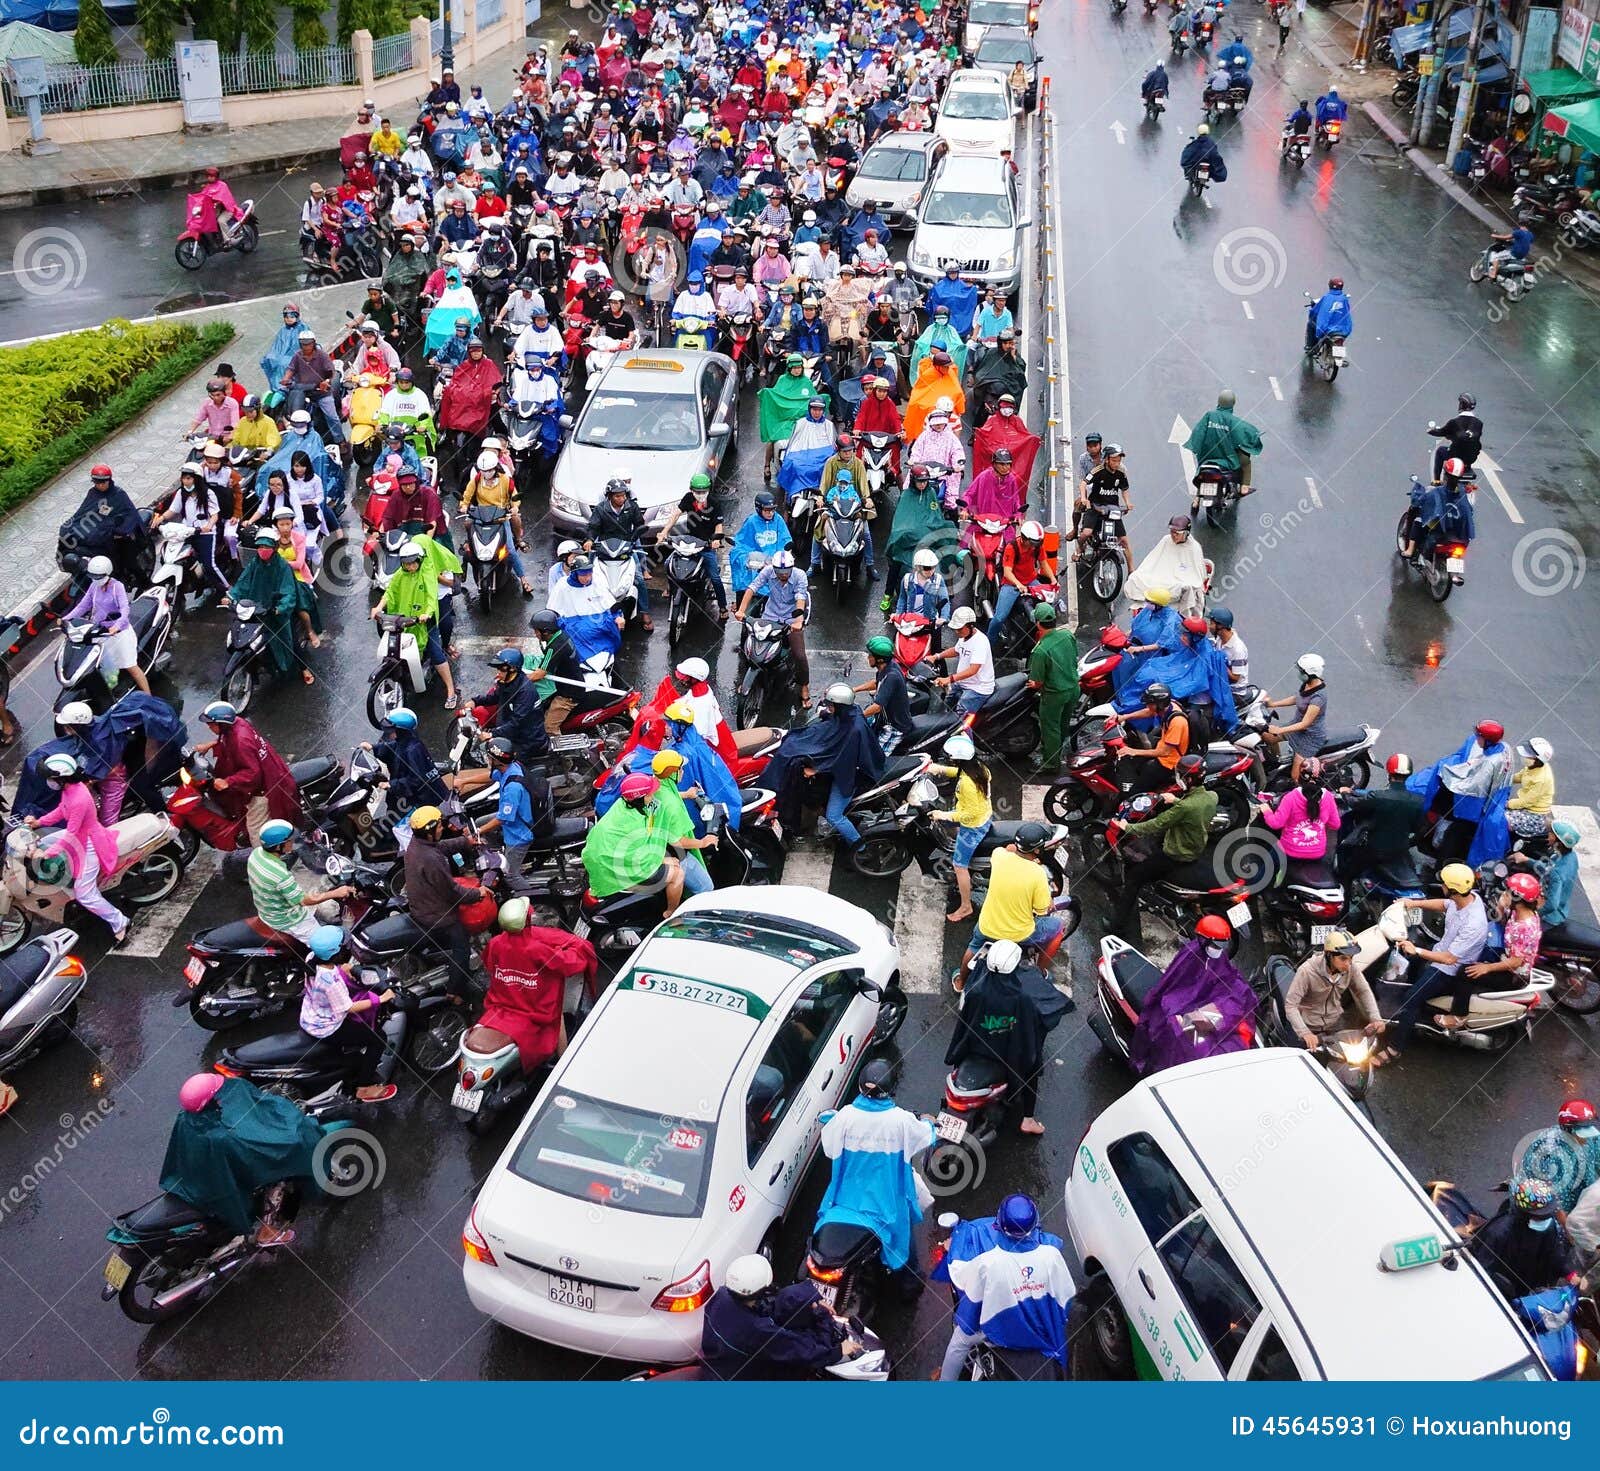 traffic-jam-asia-city-rush-hour-rain-day-ho-chi-minh-viet-nam-oct-impression-scene-crowd-vietnamese-people-wear-45645931.jpg